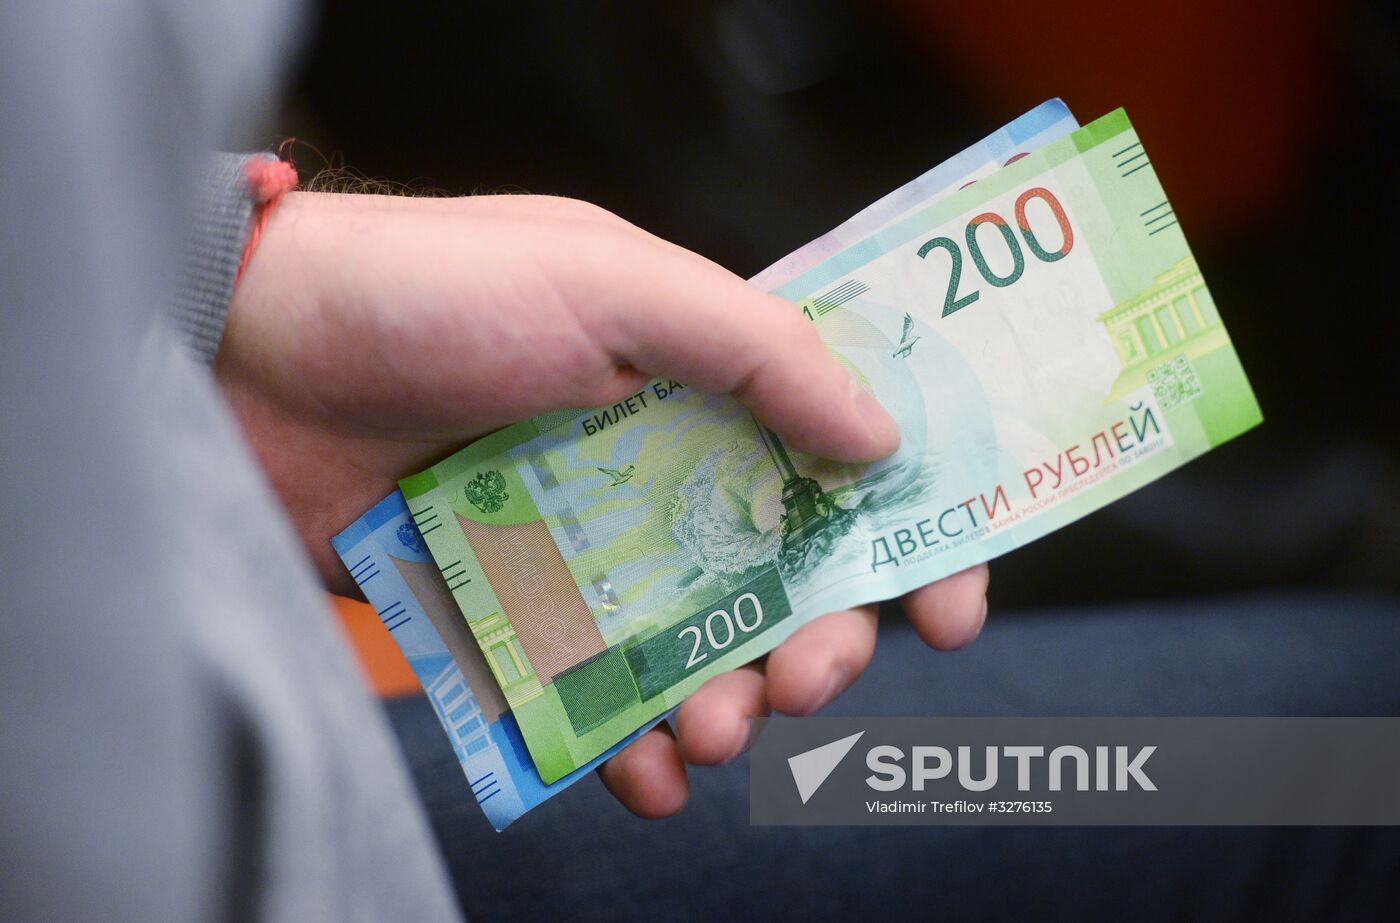 Goznak presents Banknotes 2017 app